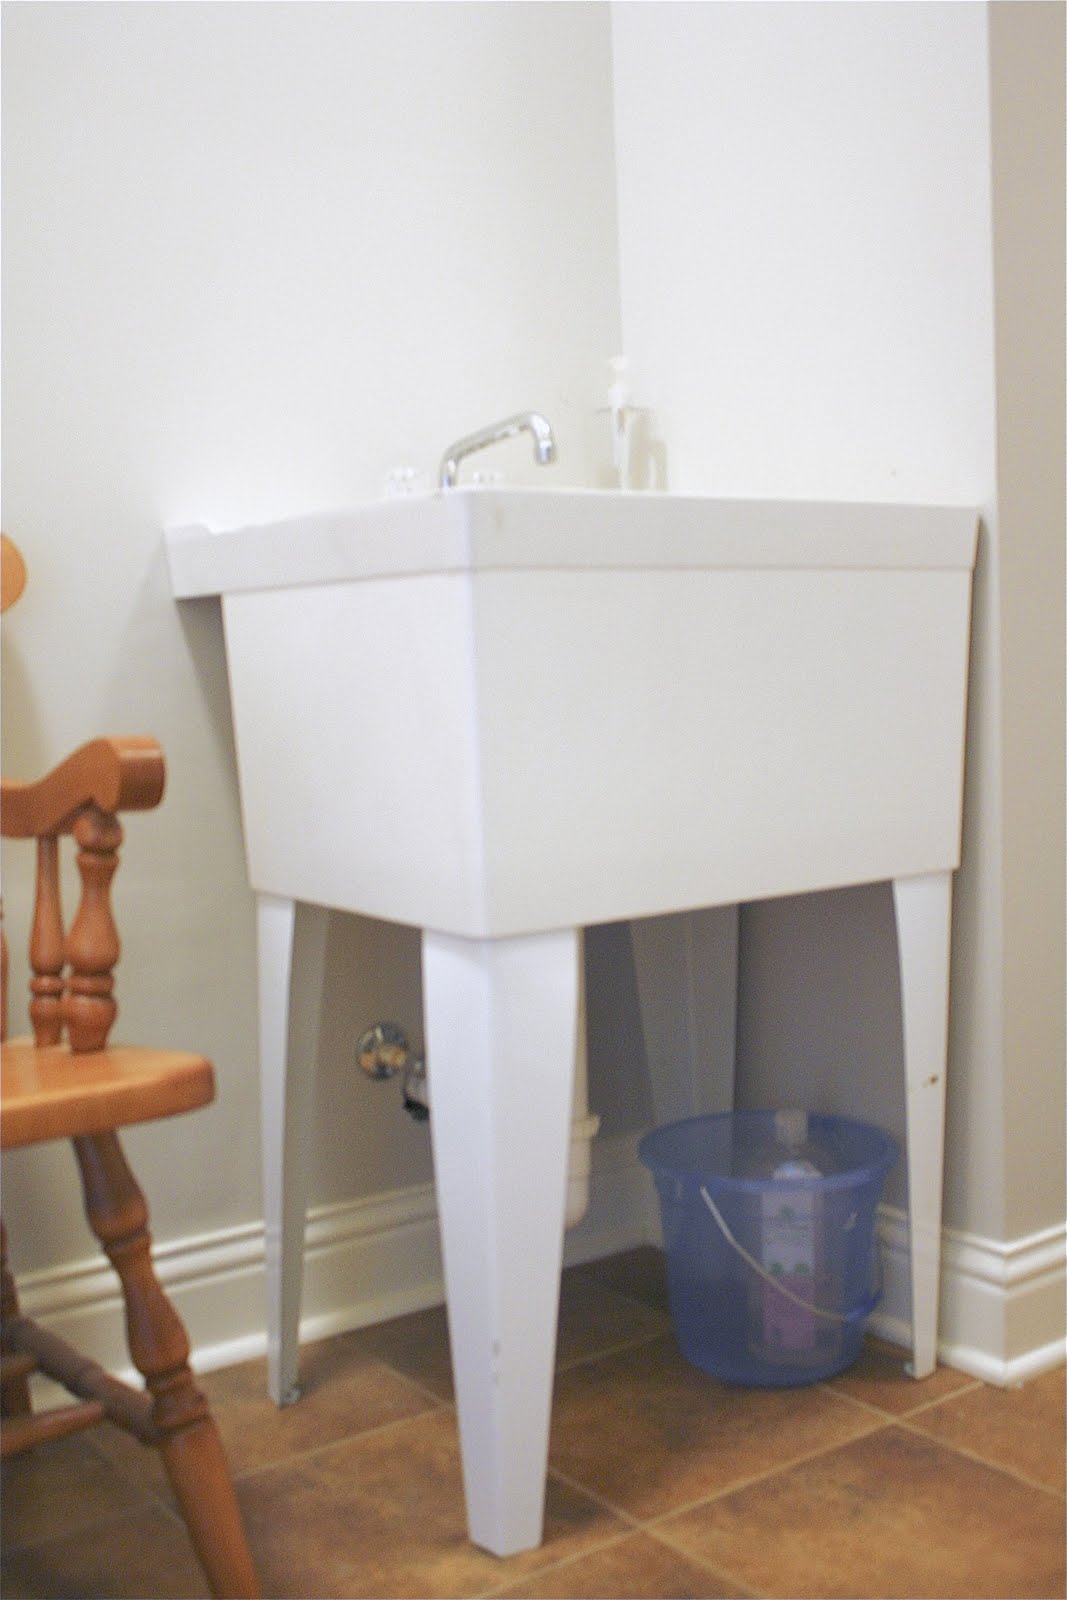 DIY Utility Sink Skirt - Home Design Interior Paris